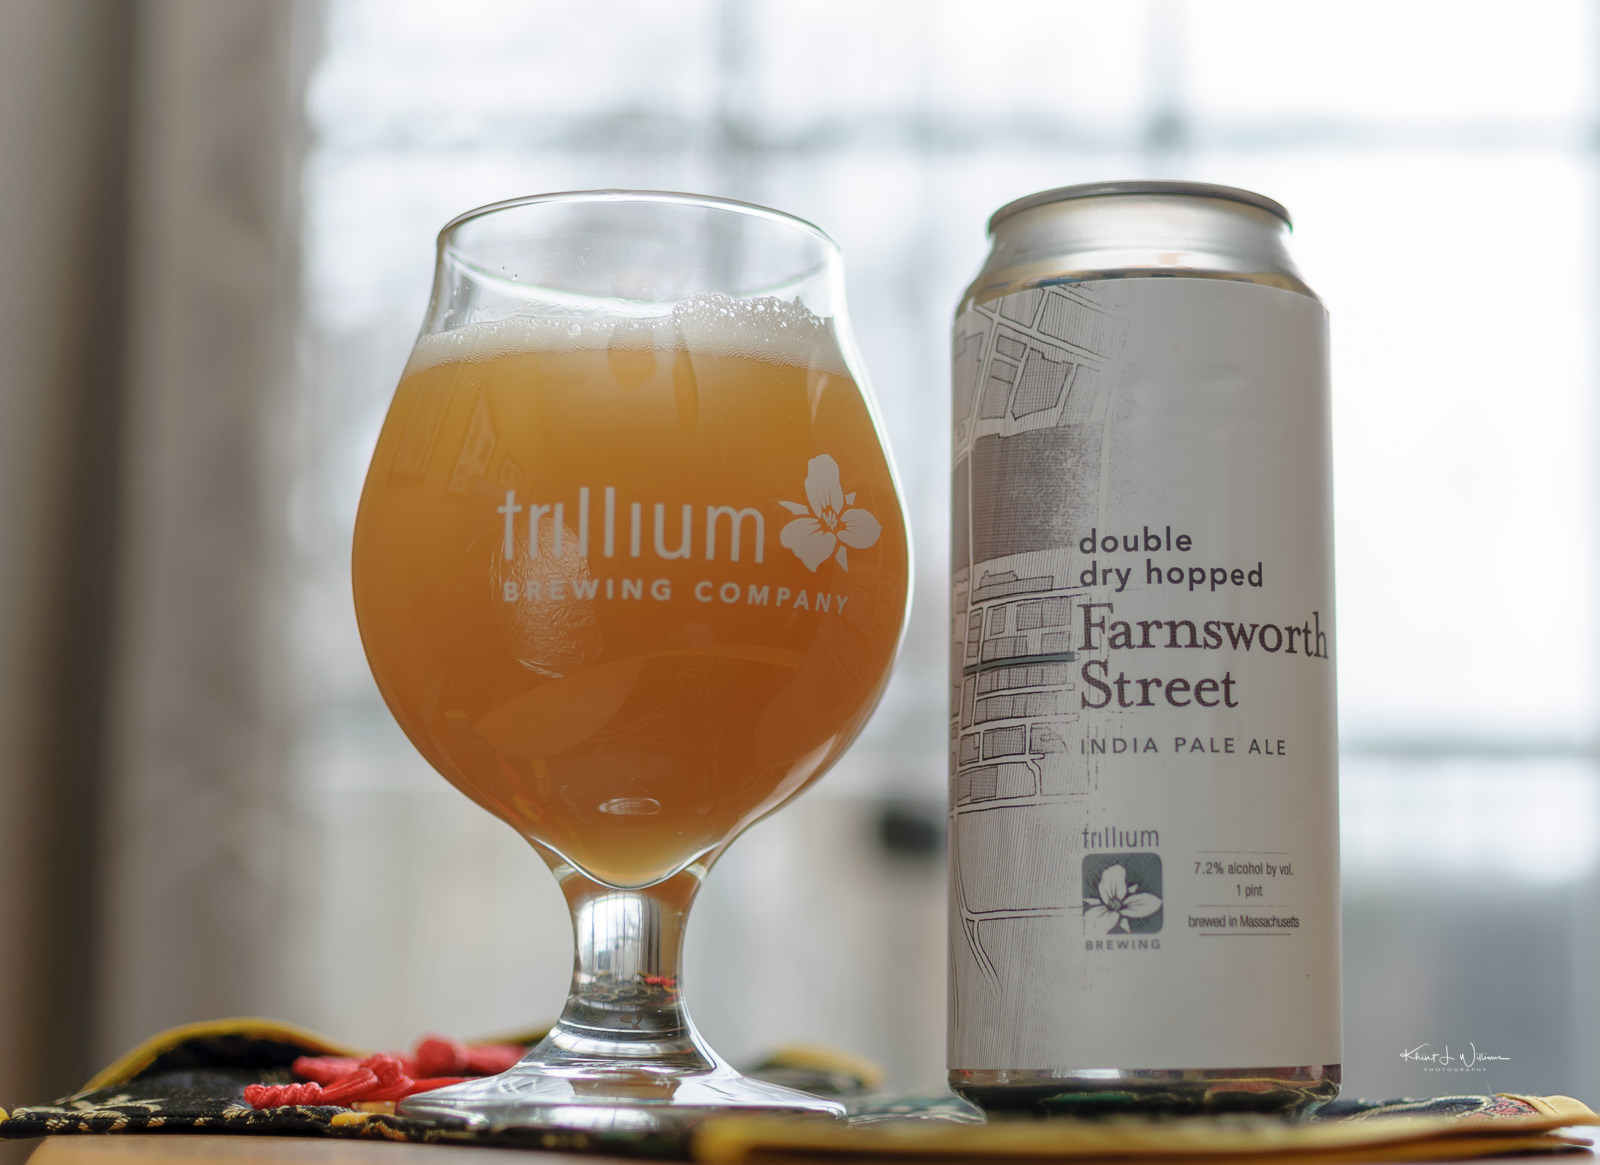 Trillium Brewing Company's Double Dry Hopped Farnsworth Street